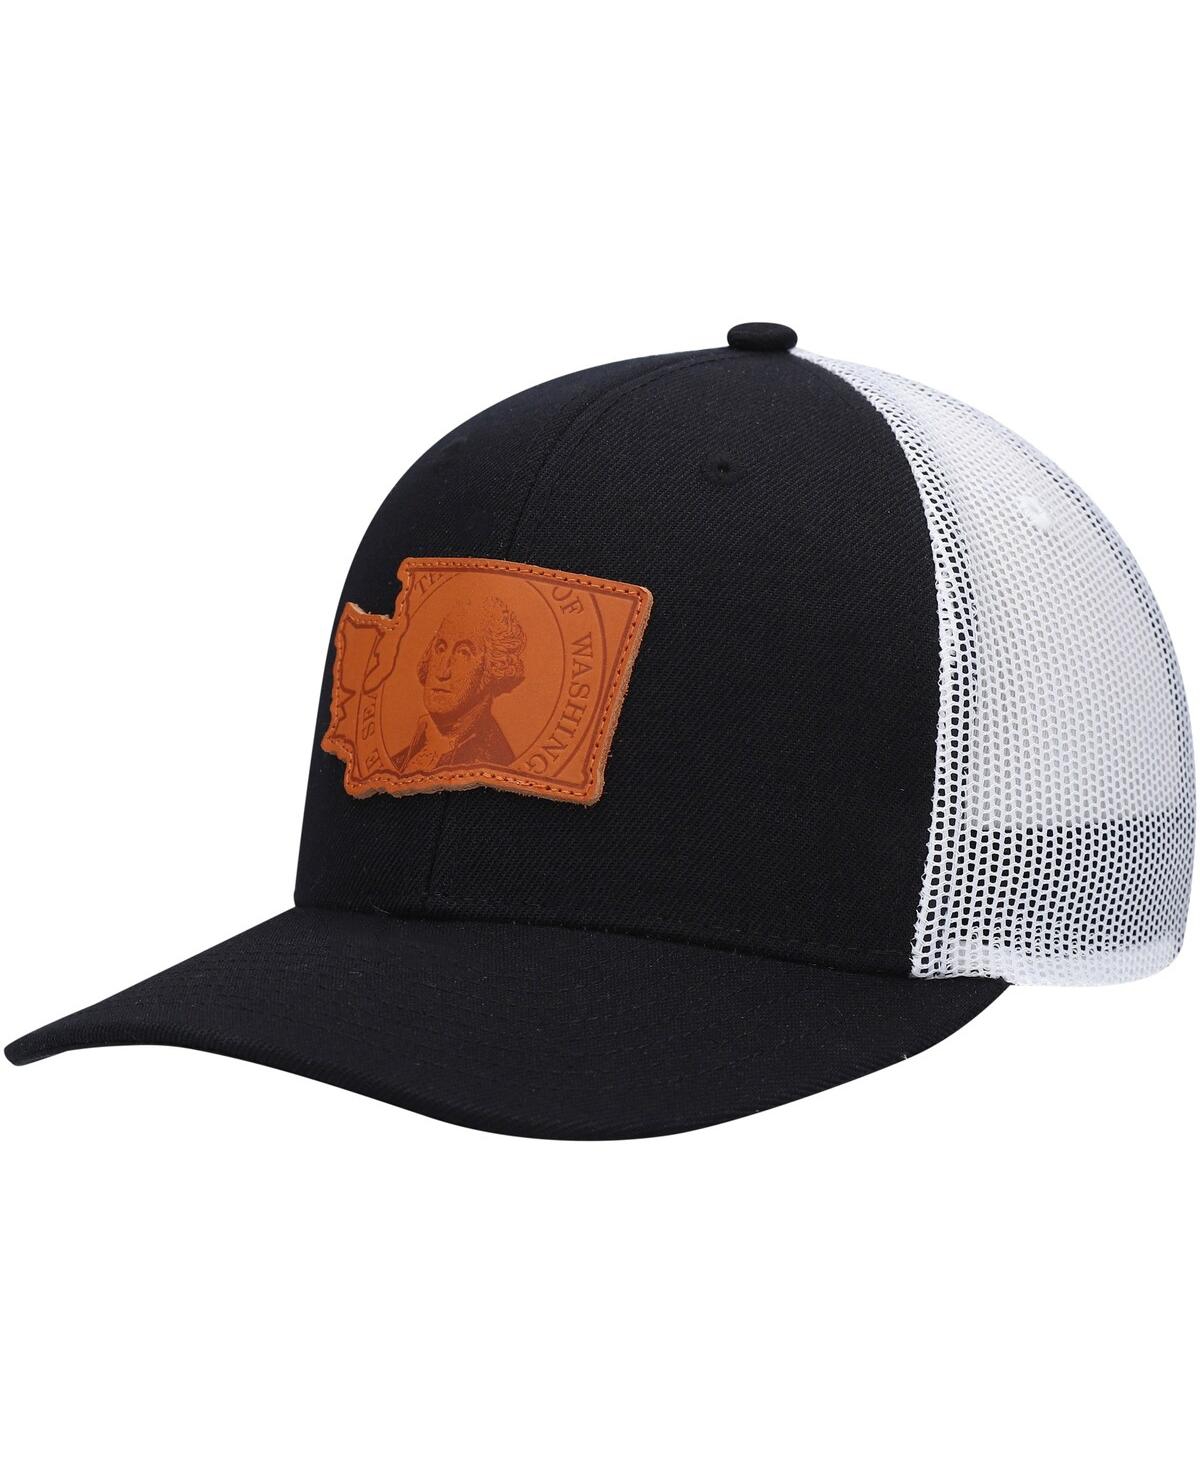 Shop Local Crowns Men's  Black Washington Leather State Applique Trucker Snapback Hat